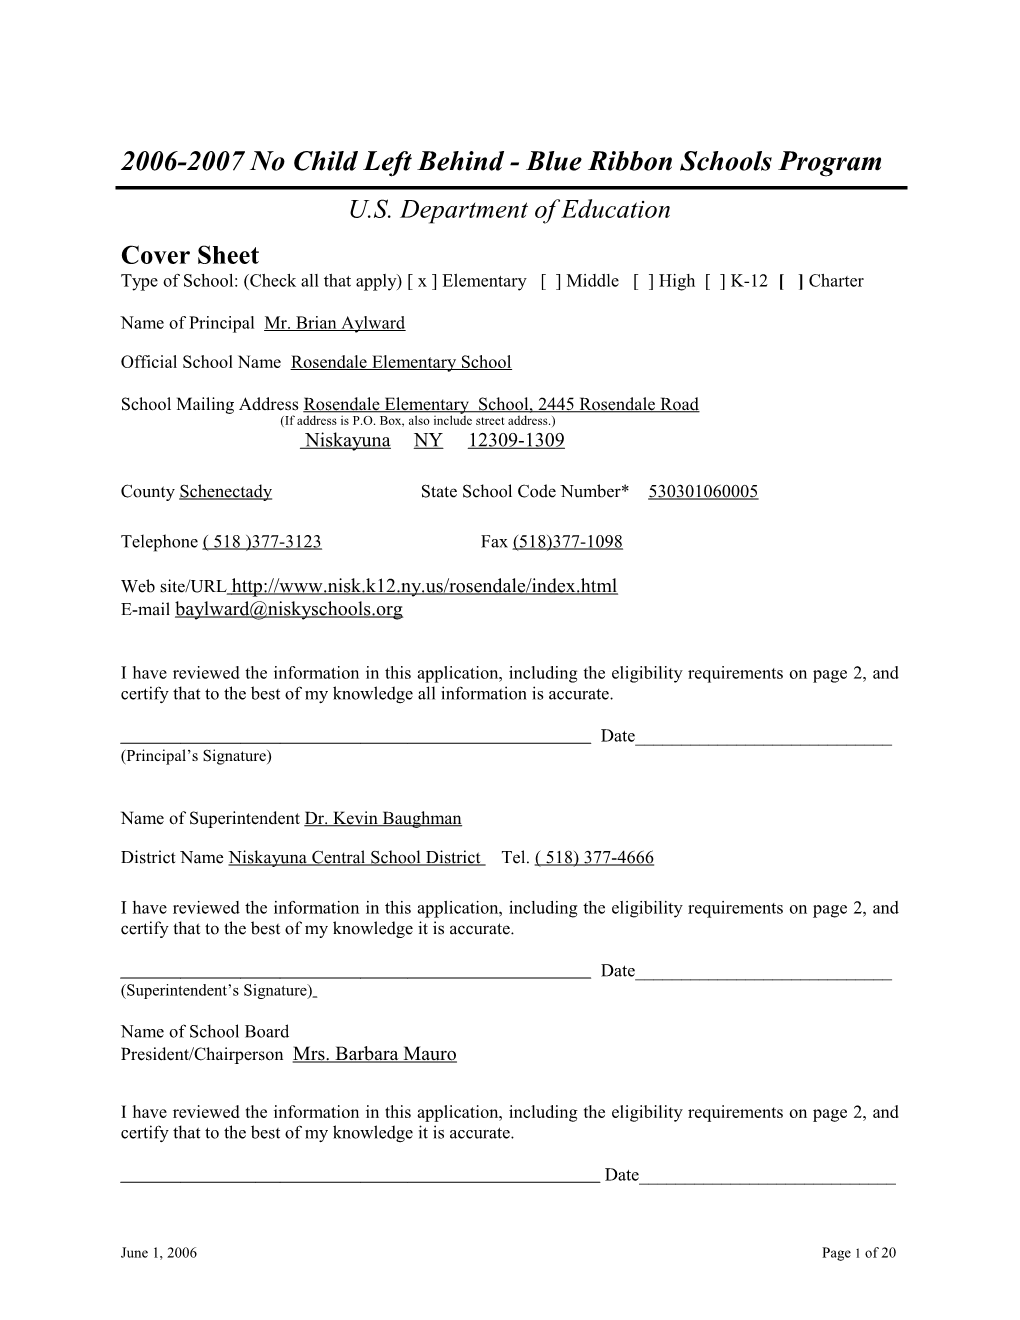 Application: 2006-2007, No Child Left Behind - Blue Ribbon Schools Program (MS Word) s14